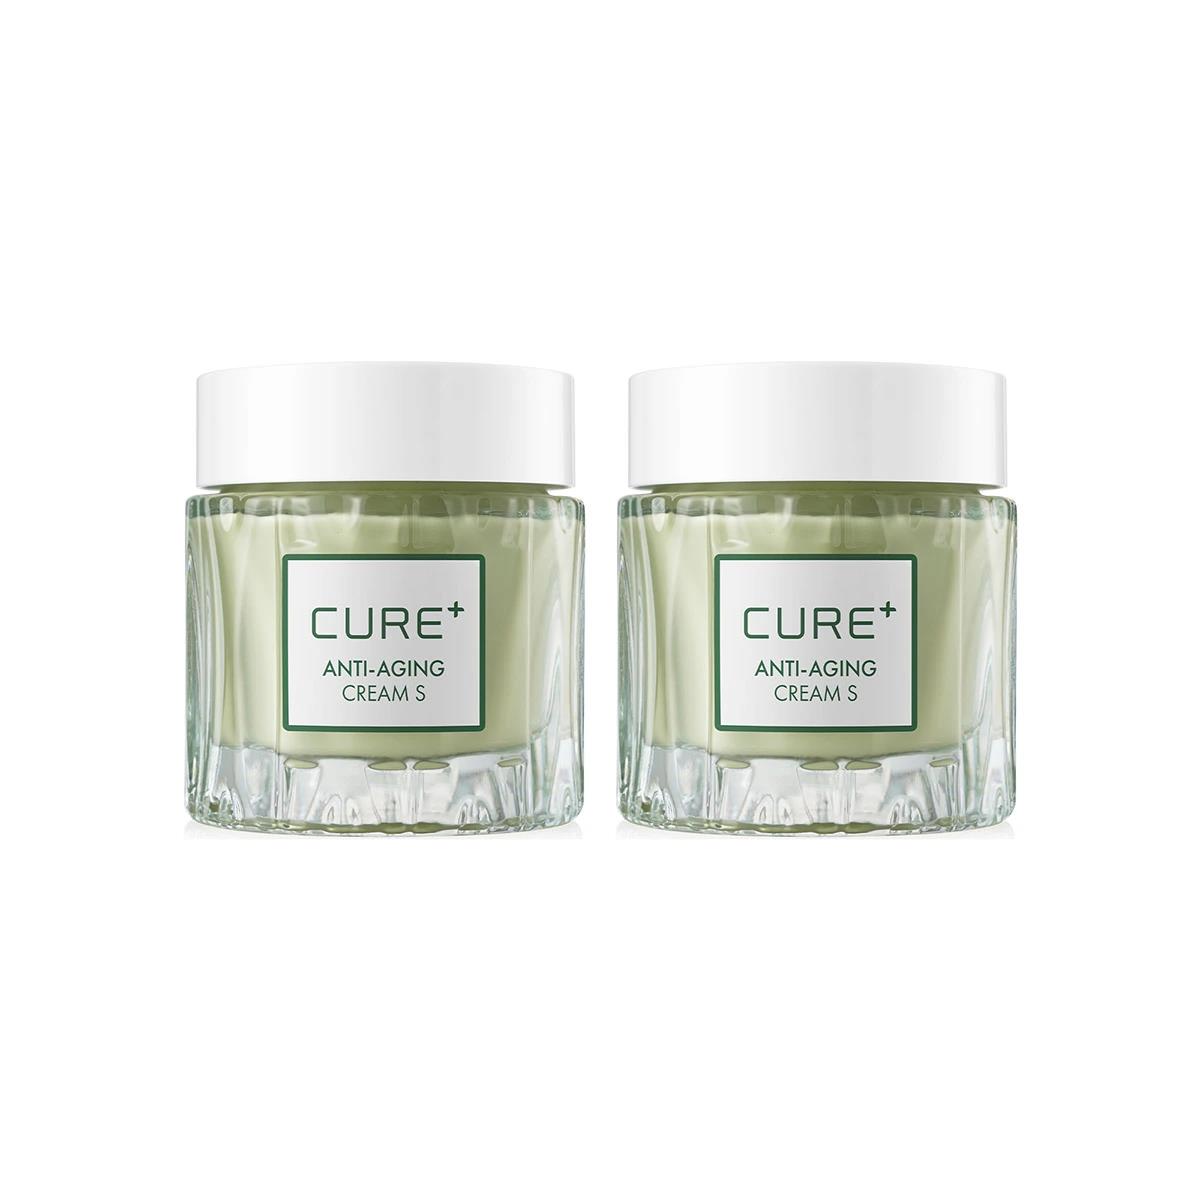 Cure+Anti-Aging Cream S 50gx2ea/New/Kim Jungmoon Aloe/Firming/Wrinkle/Korea